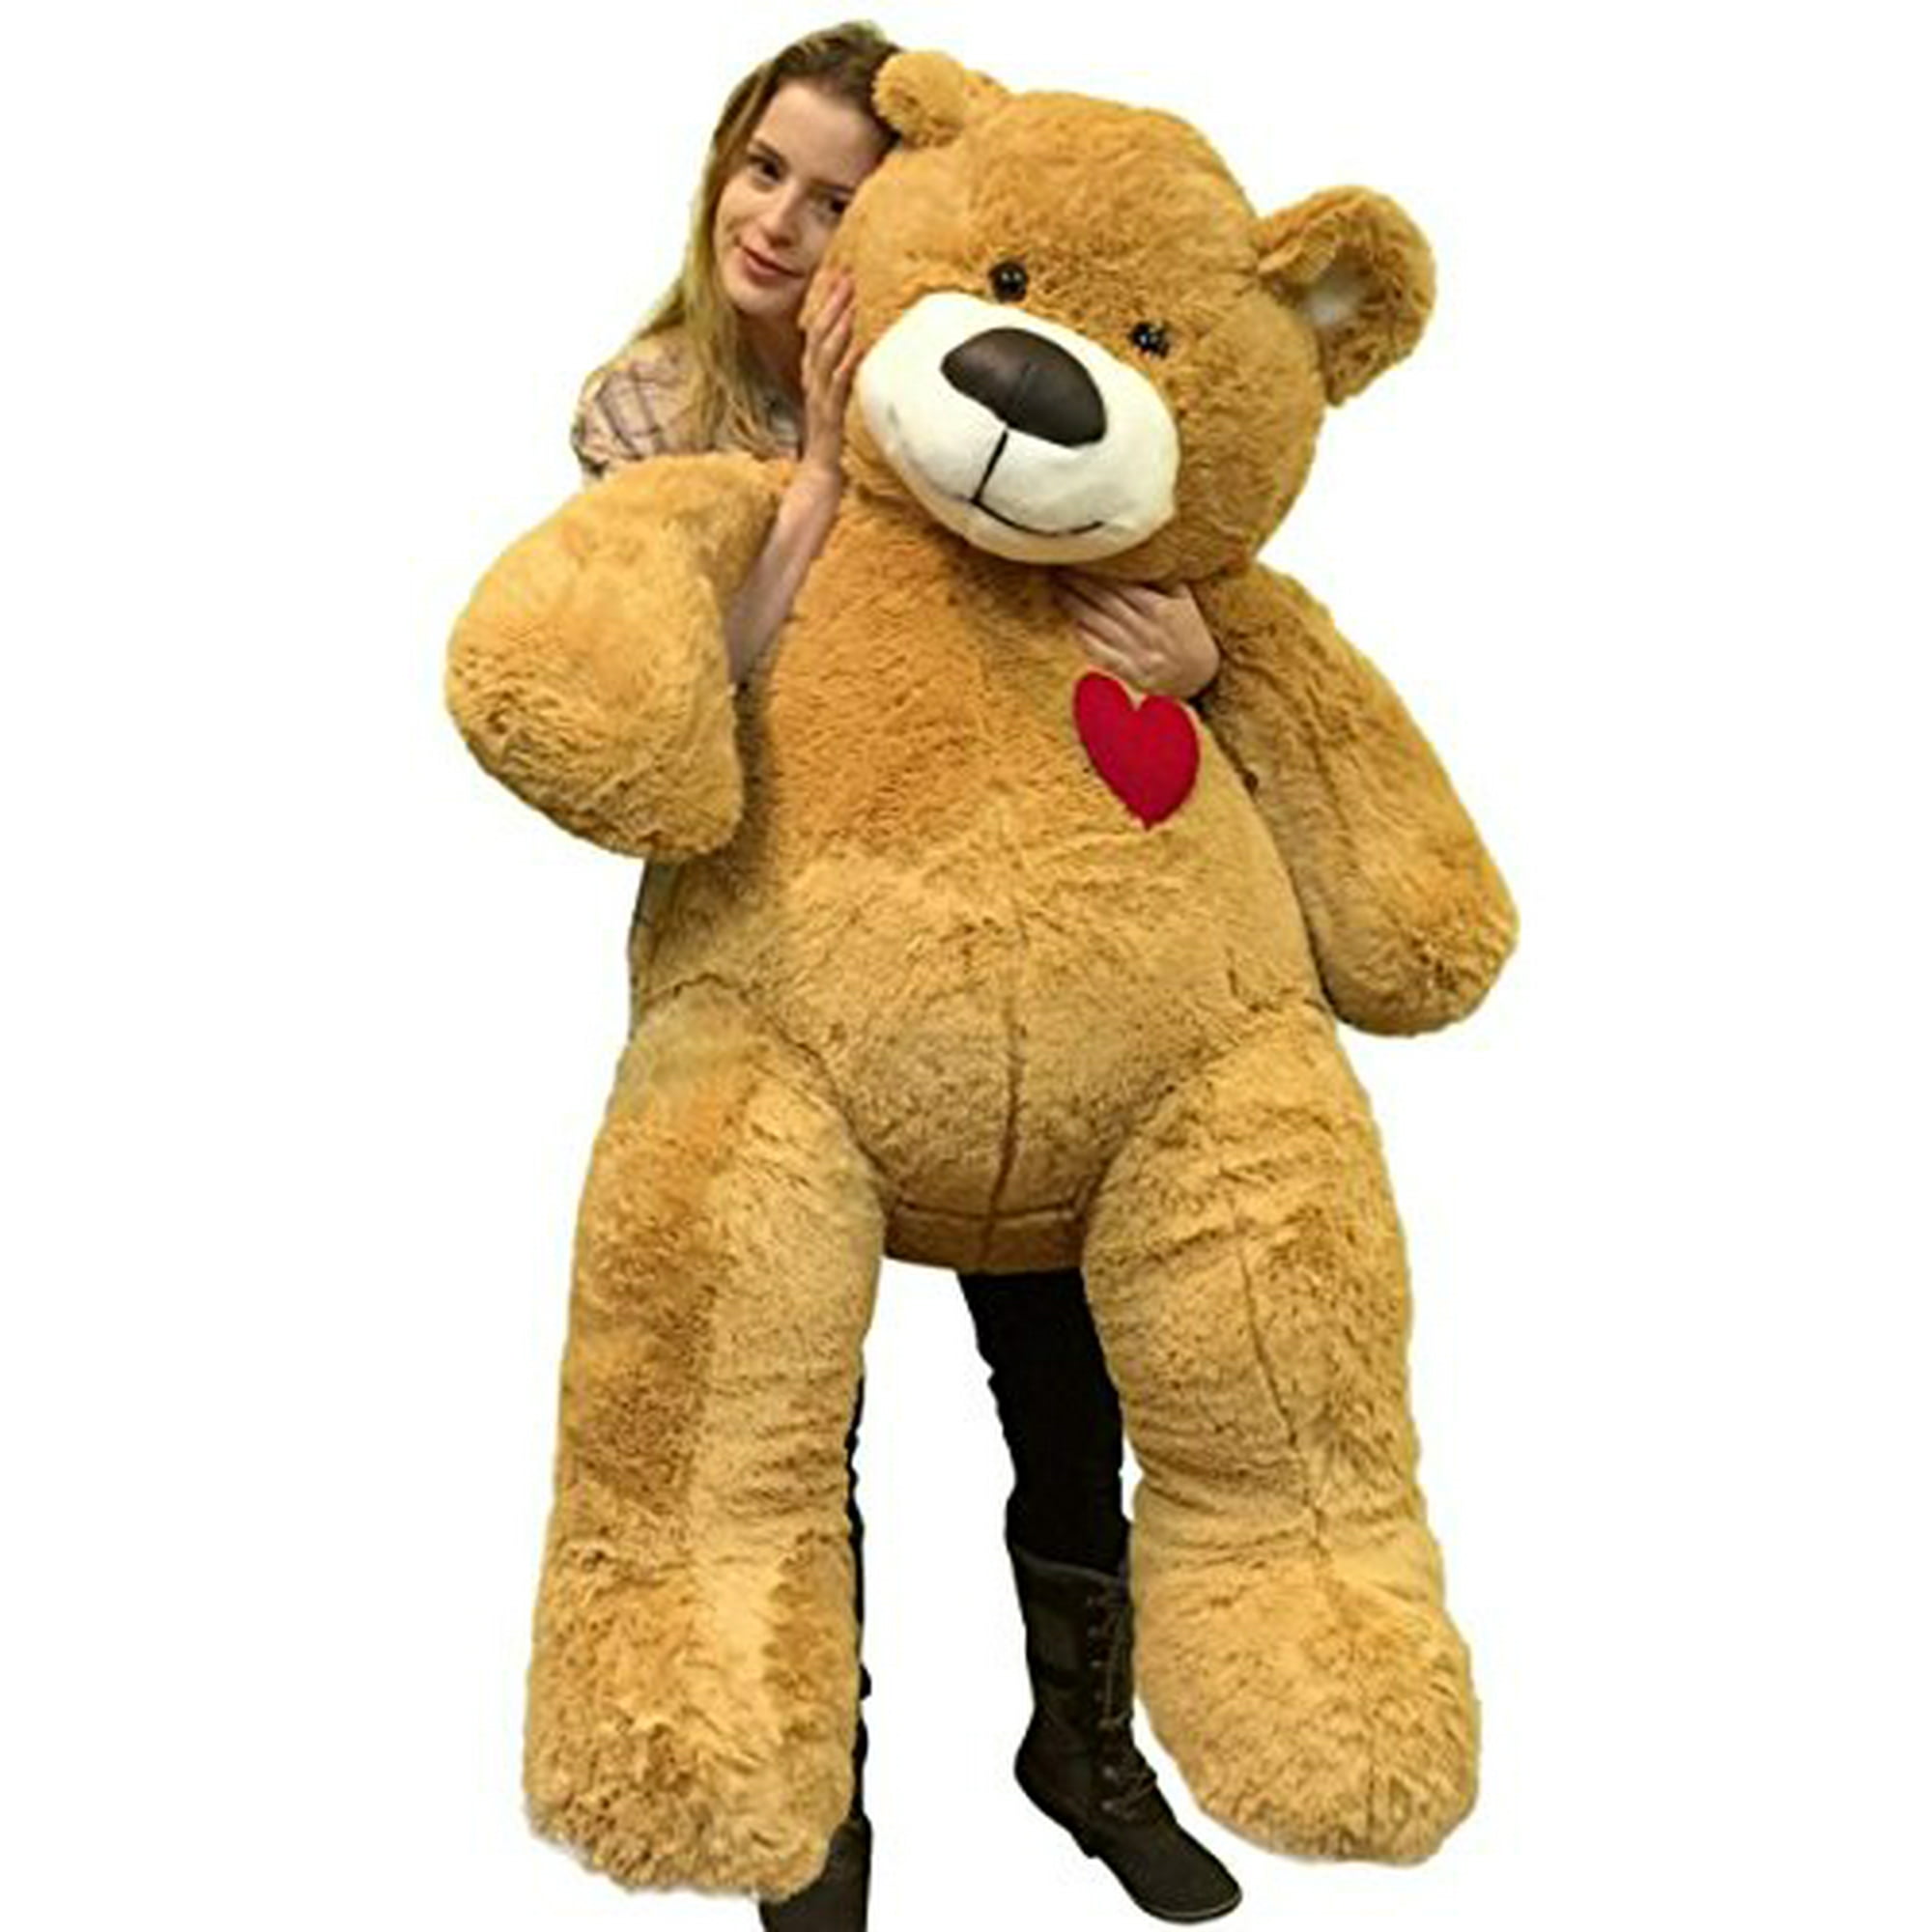 Giant Teddy Bear 55 Inch Heart on Chest to Express Love, Tan Soft New Big  Plush Teddybear